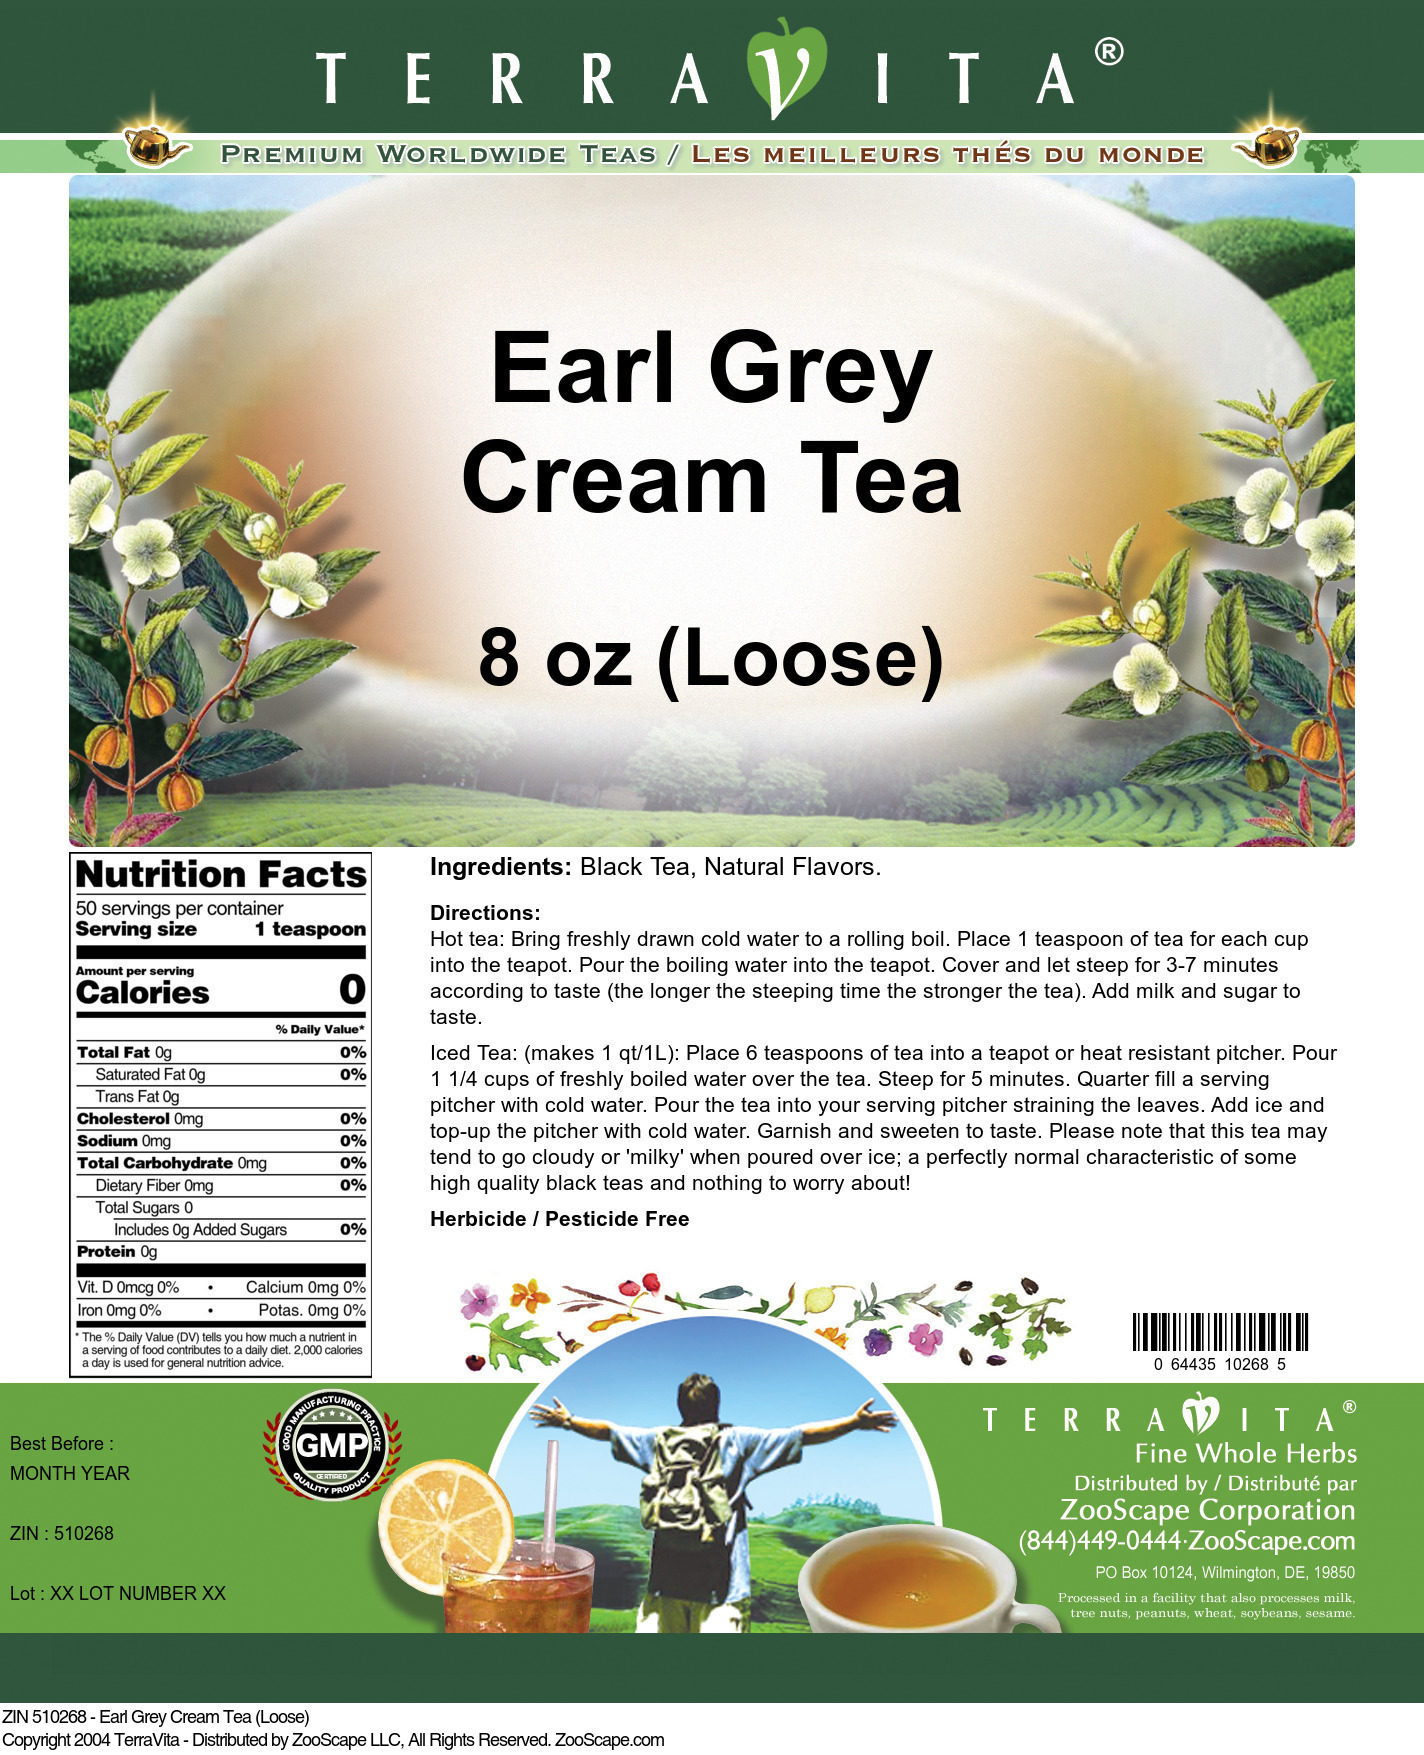 Earl Grey Cream Tea (Loose) - Label